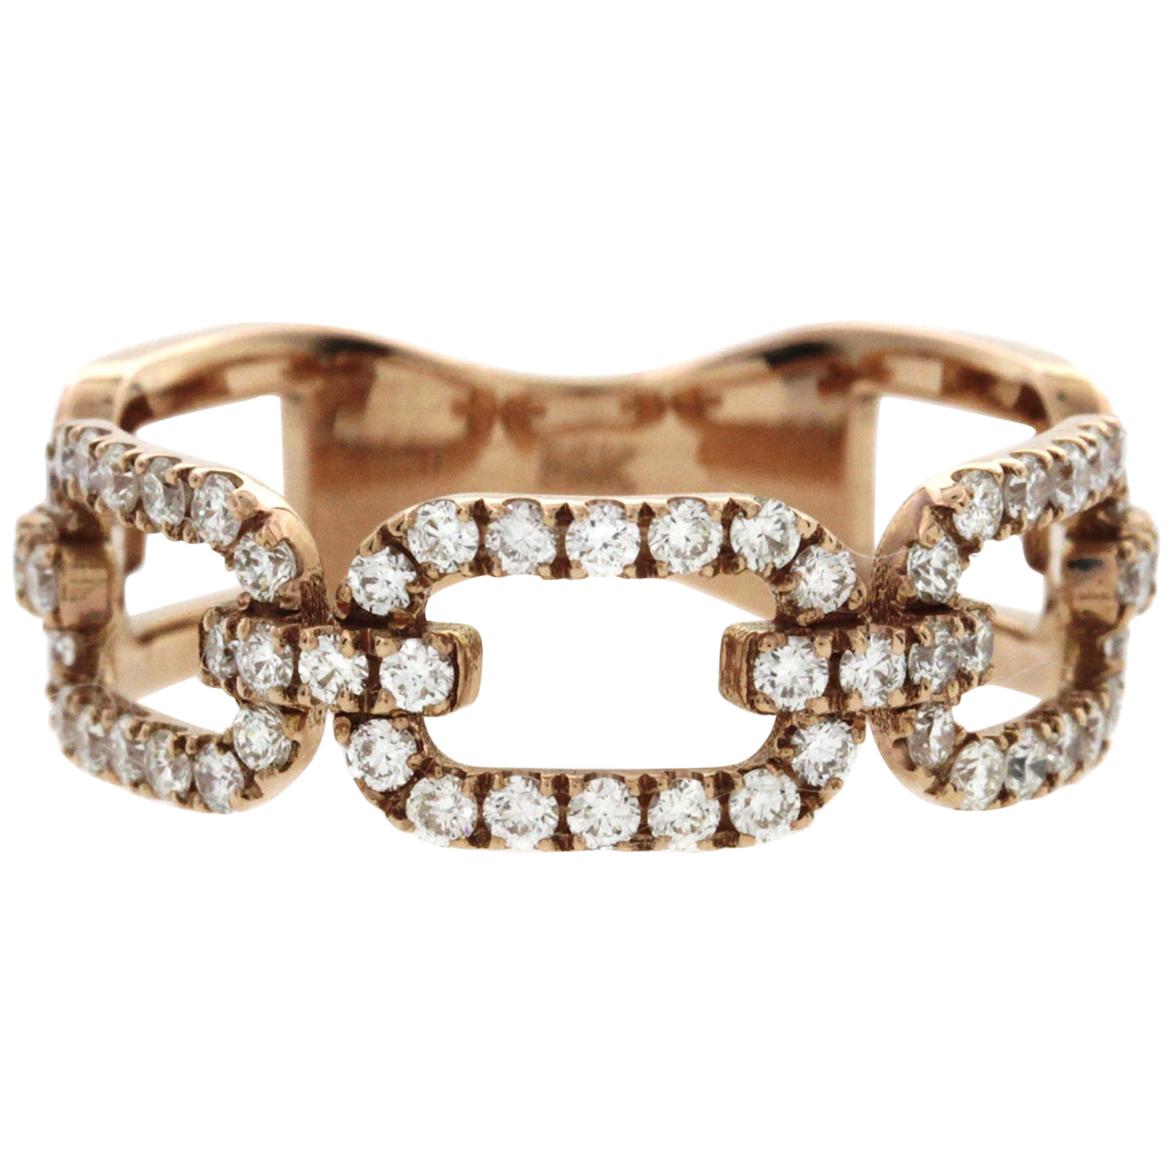 Fancy Link Chain 14 Karat Gold 0.58 Carat Diamonds Wedding Band Ring